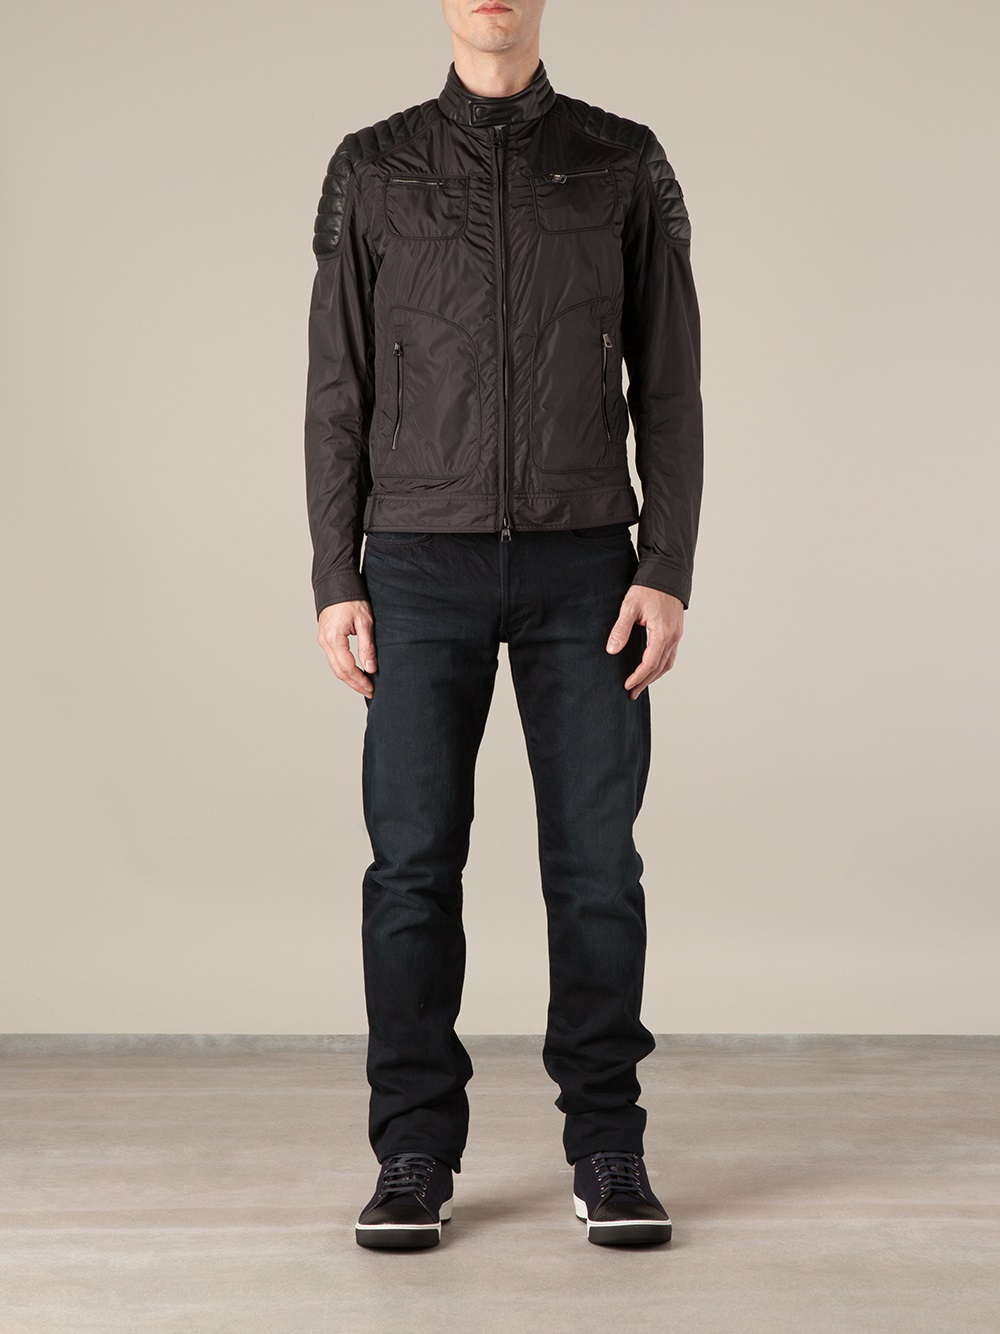 Moncler Salomon Jacket in Black for Men - Lyst